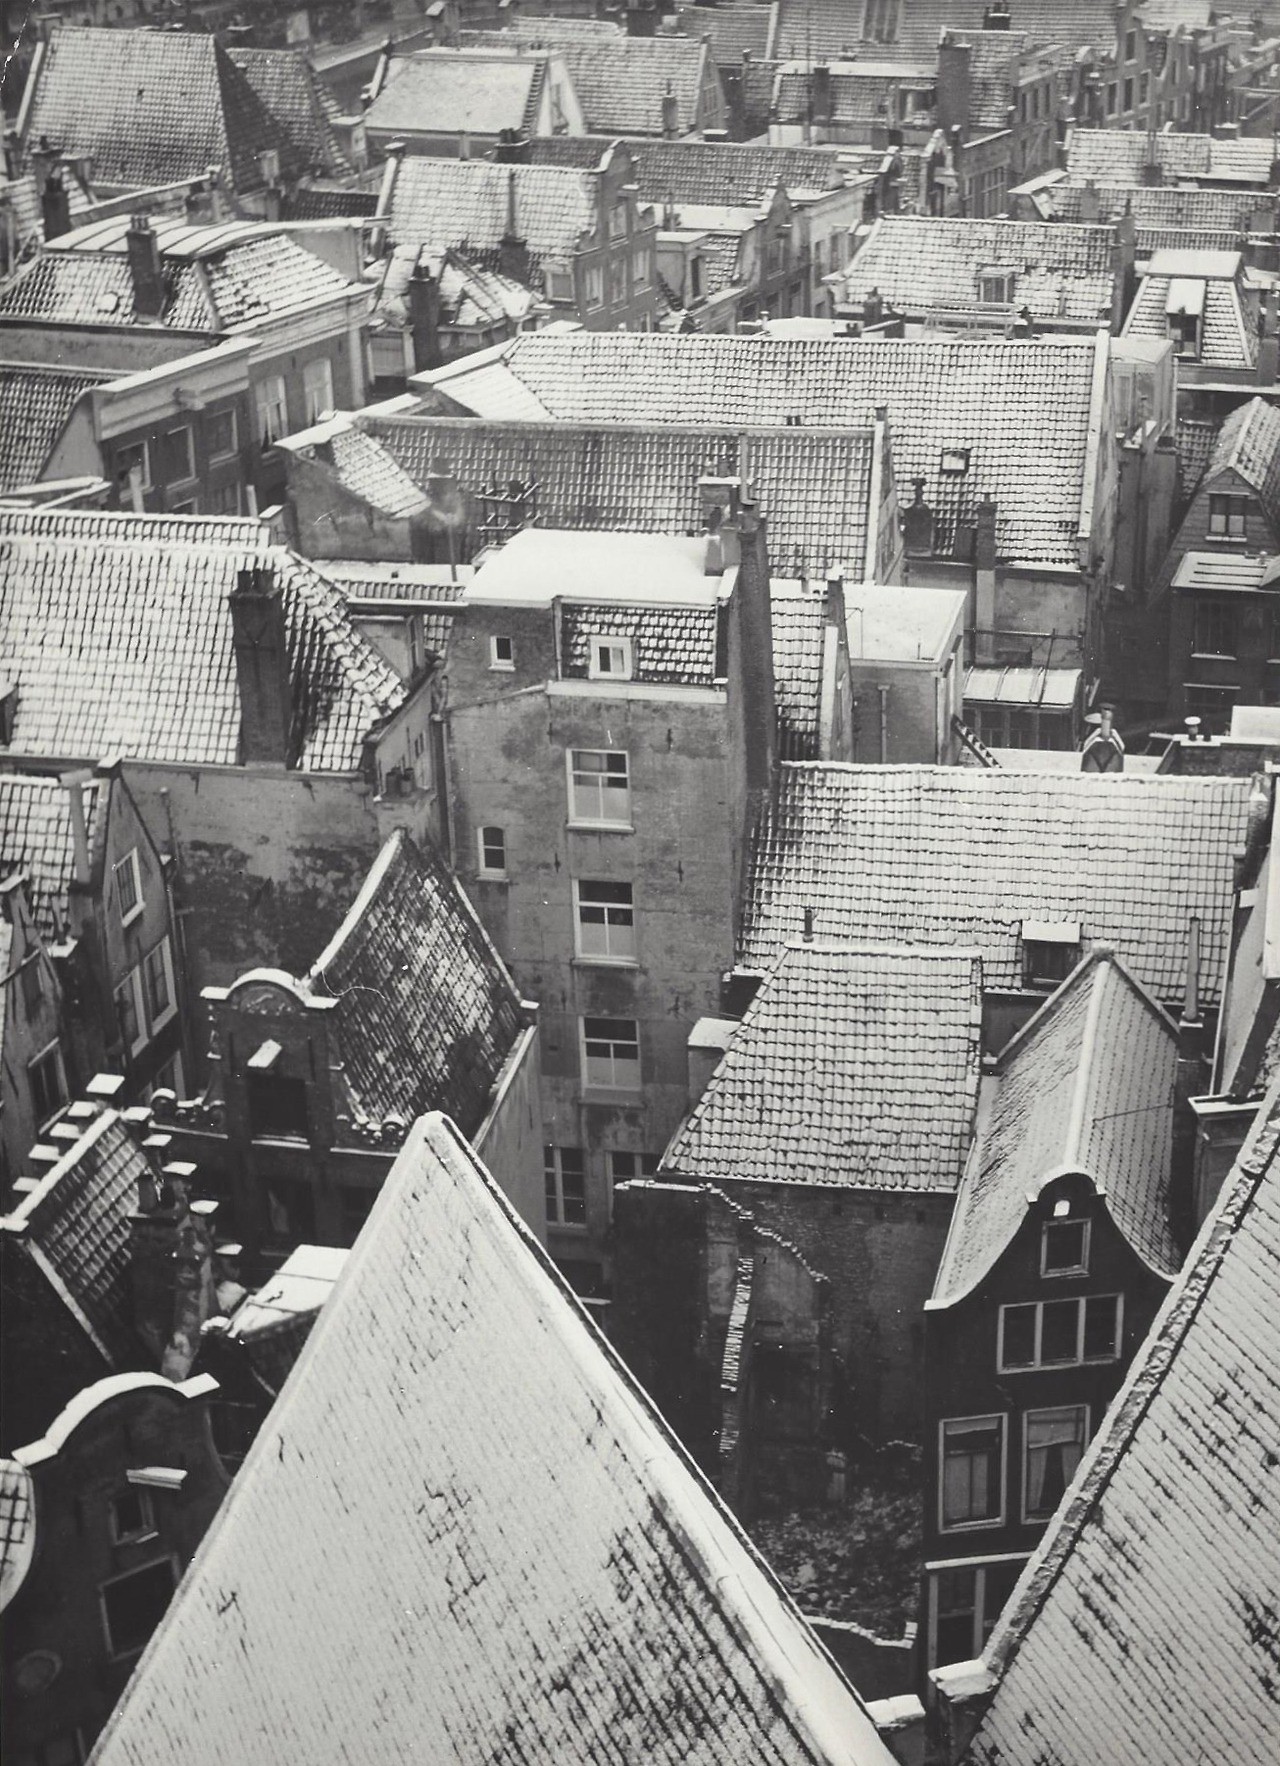 Снежные крыши Амстердама, 1950-е. Фотограф Кис Шерер